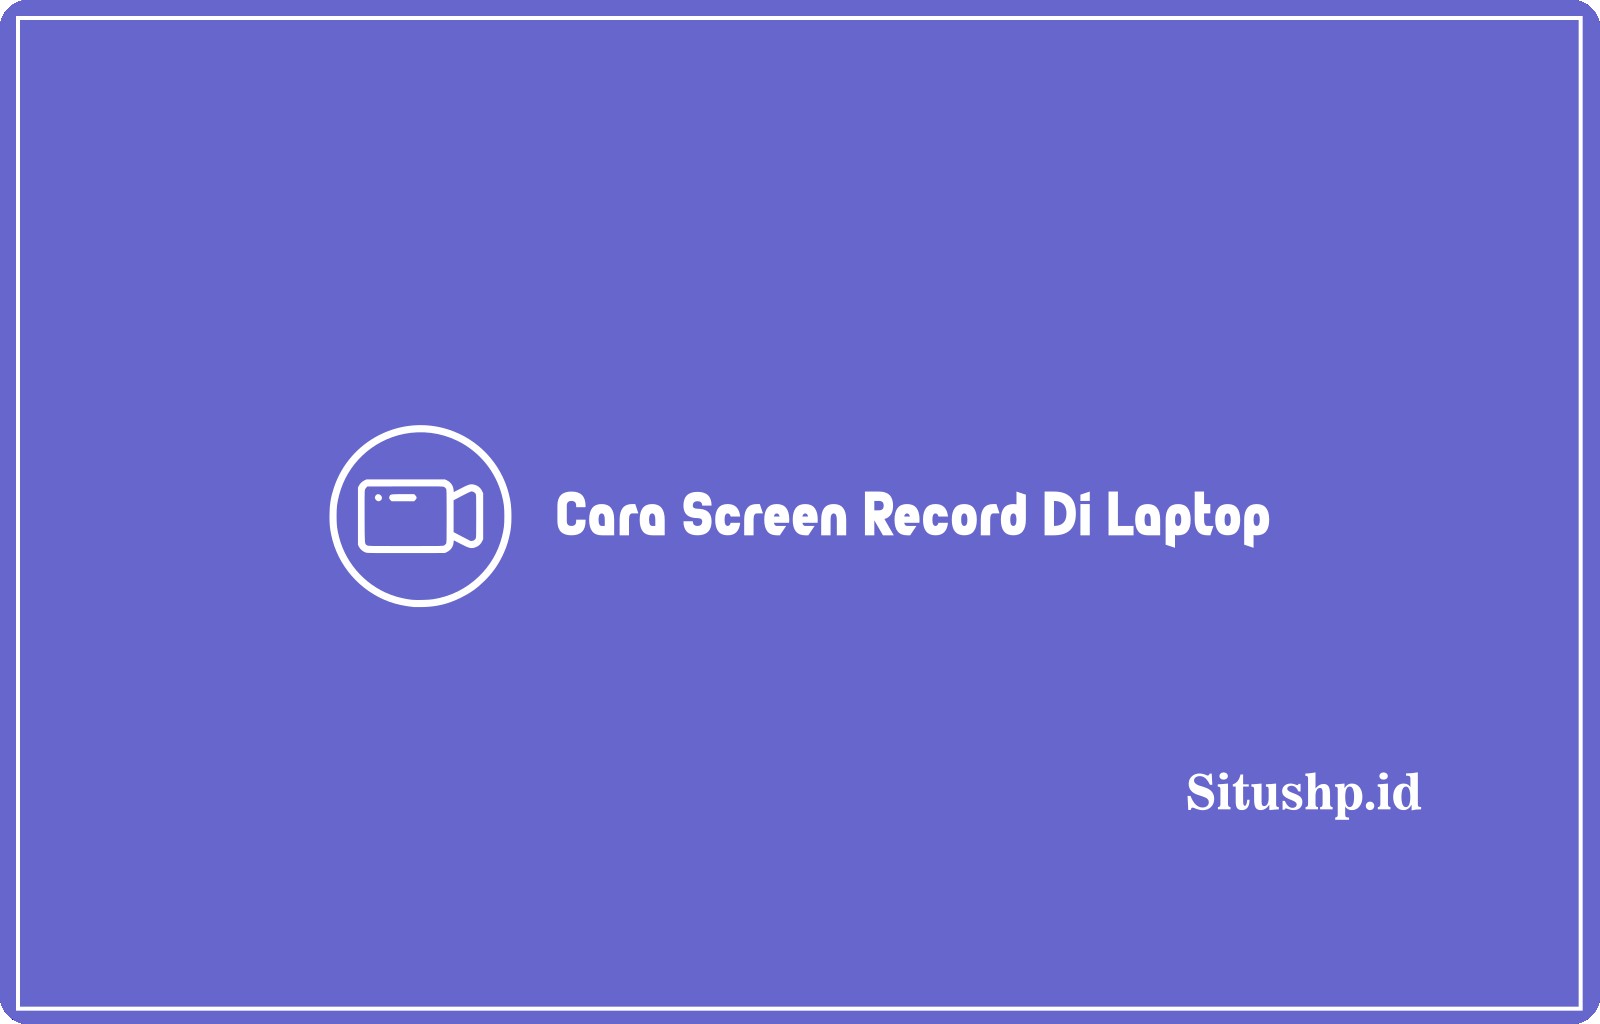 Cara Screen Record Di Laptop